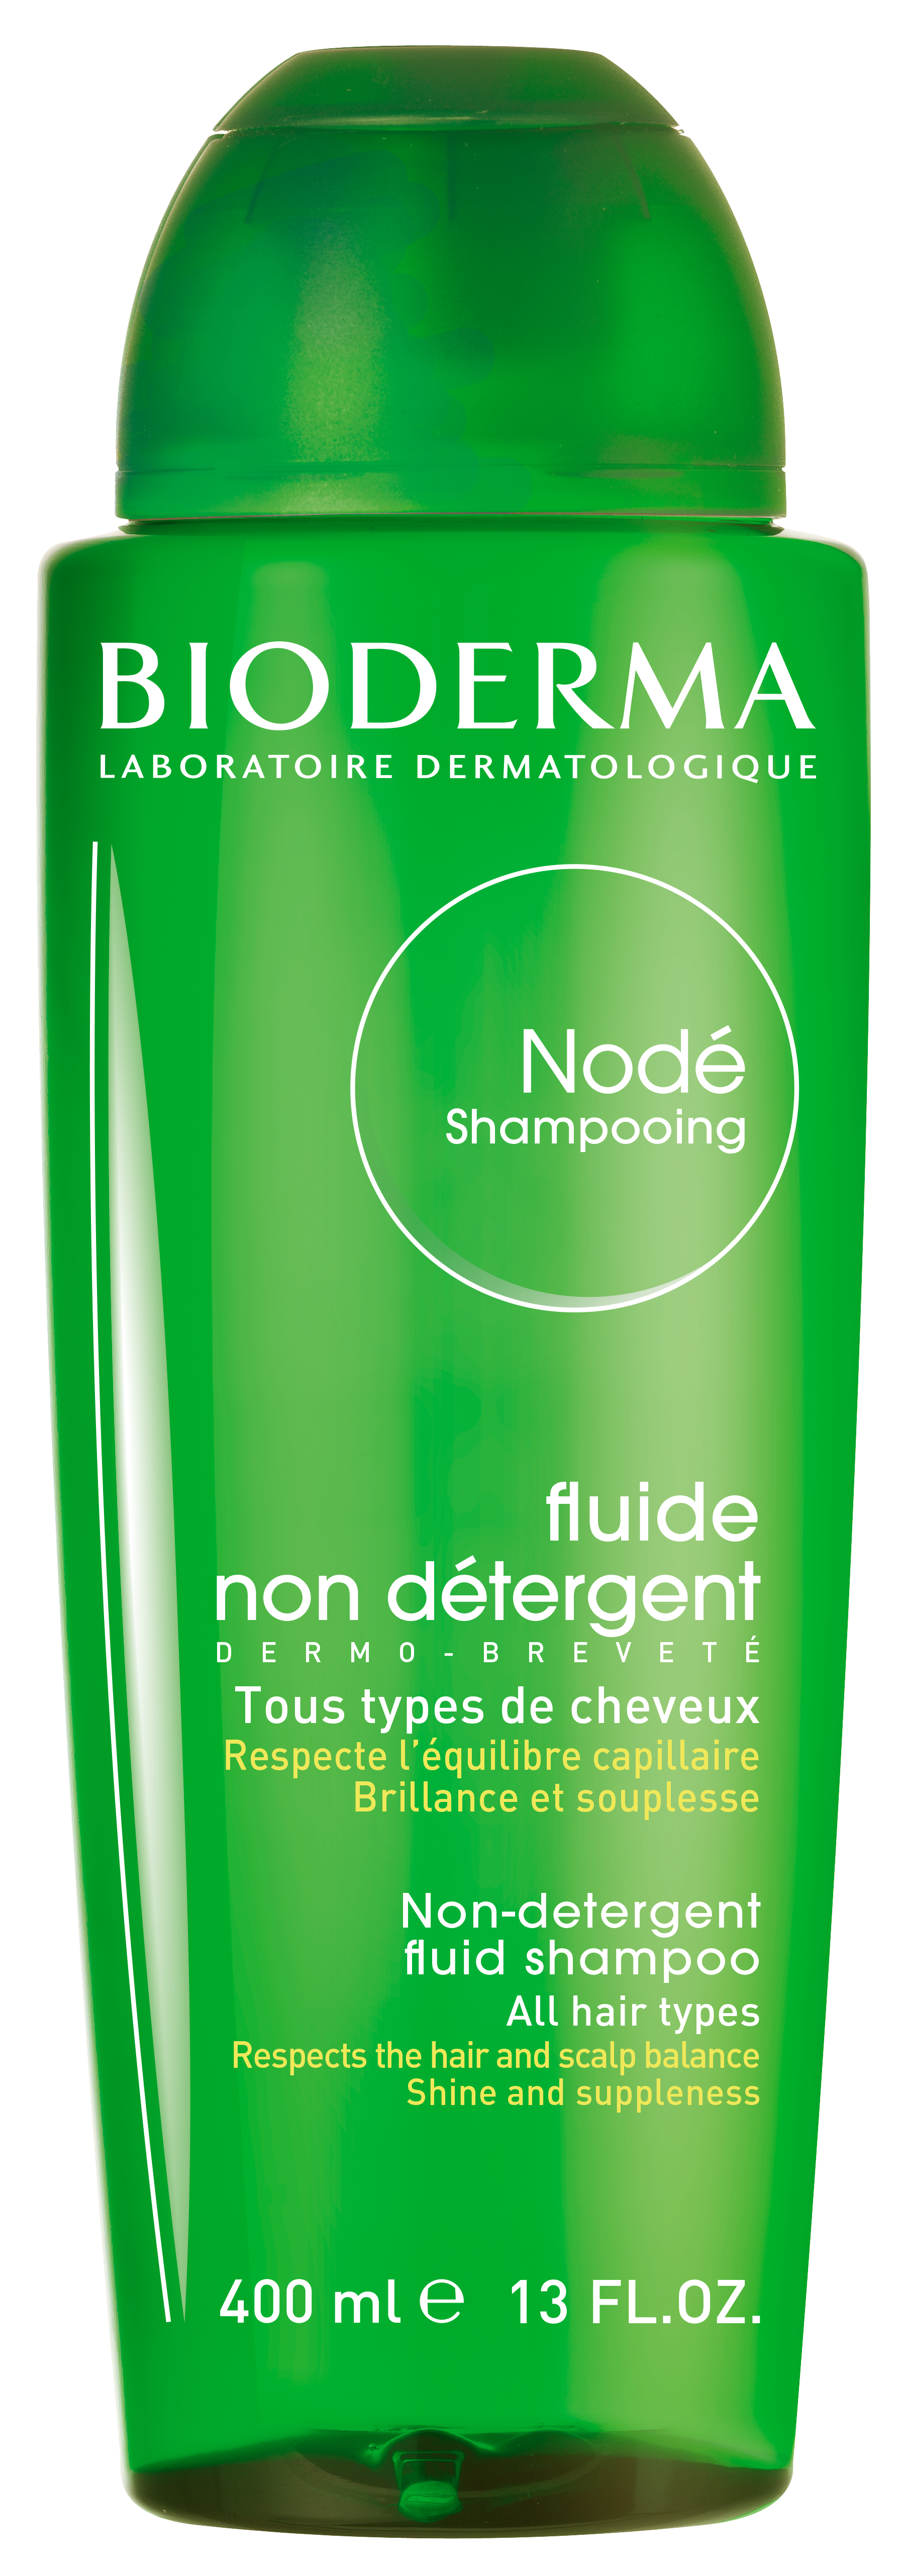 Bioderma Node Fluid Shampoo Non-detergent for All Hair Types 400ml